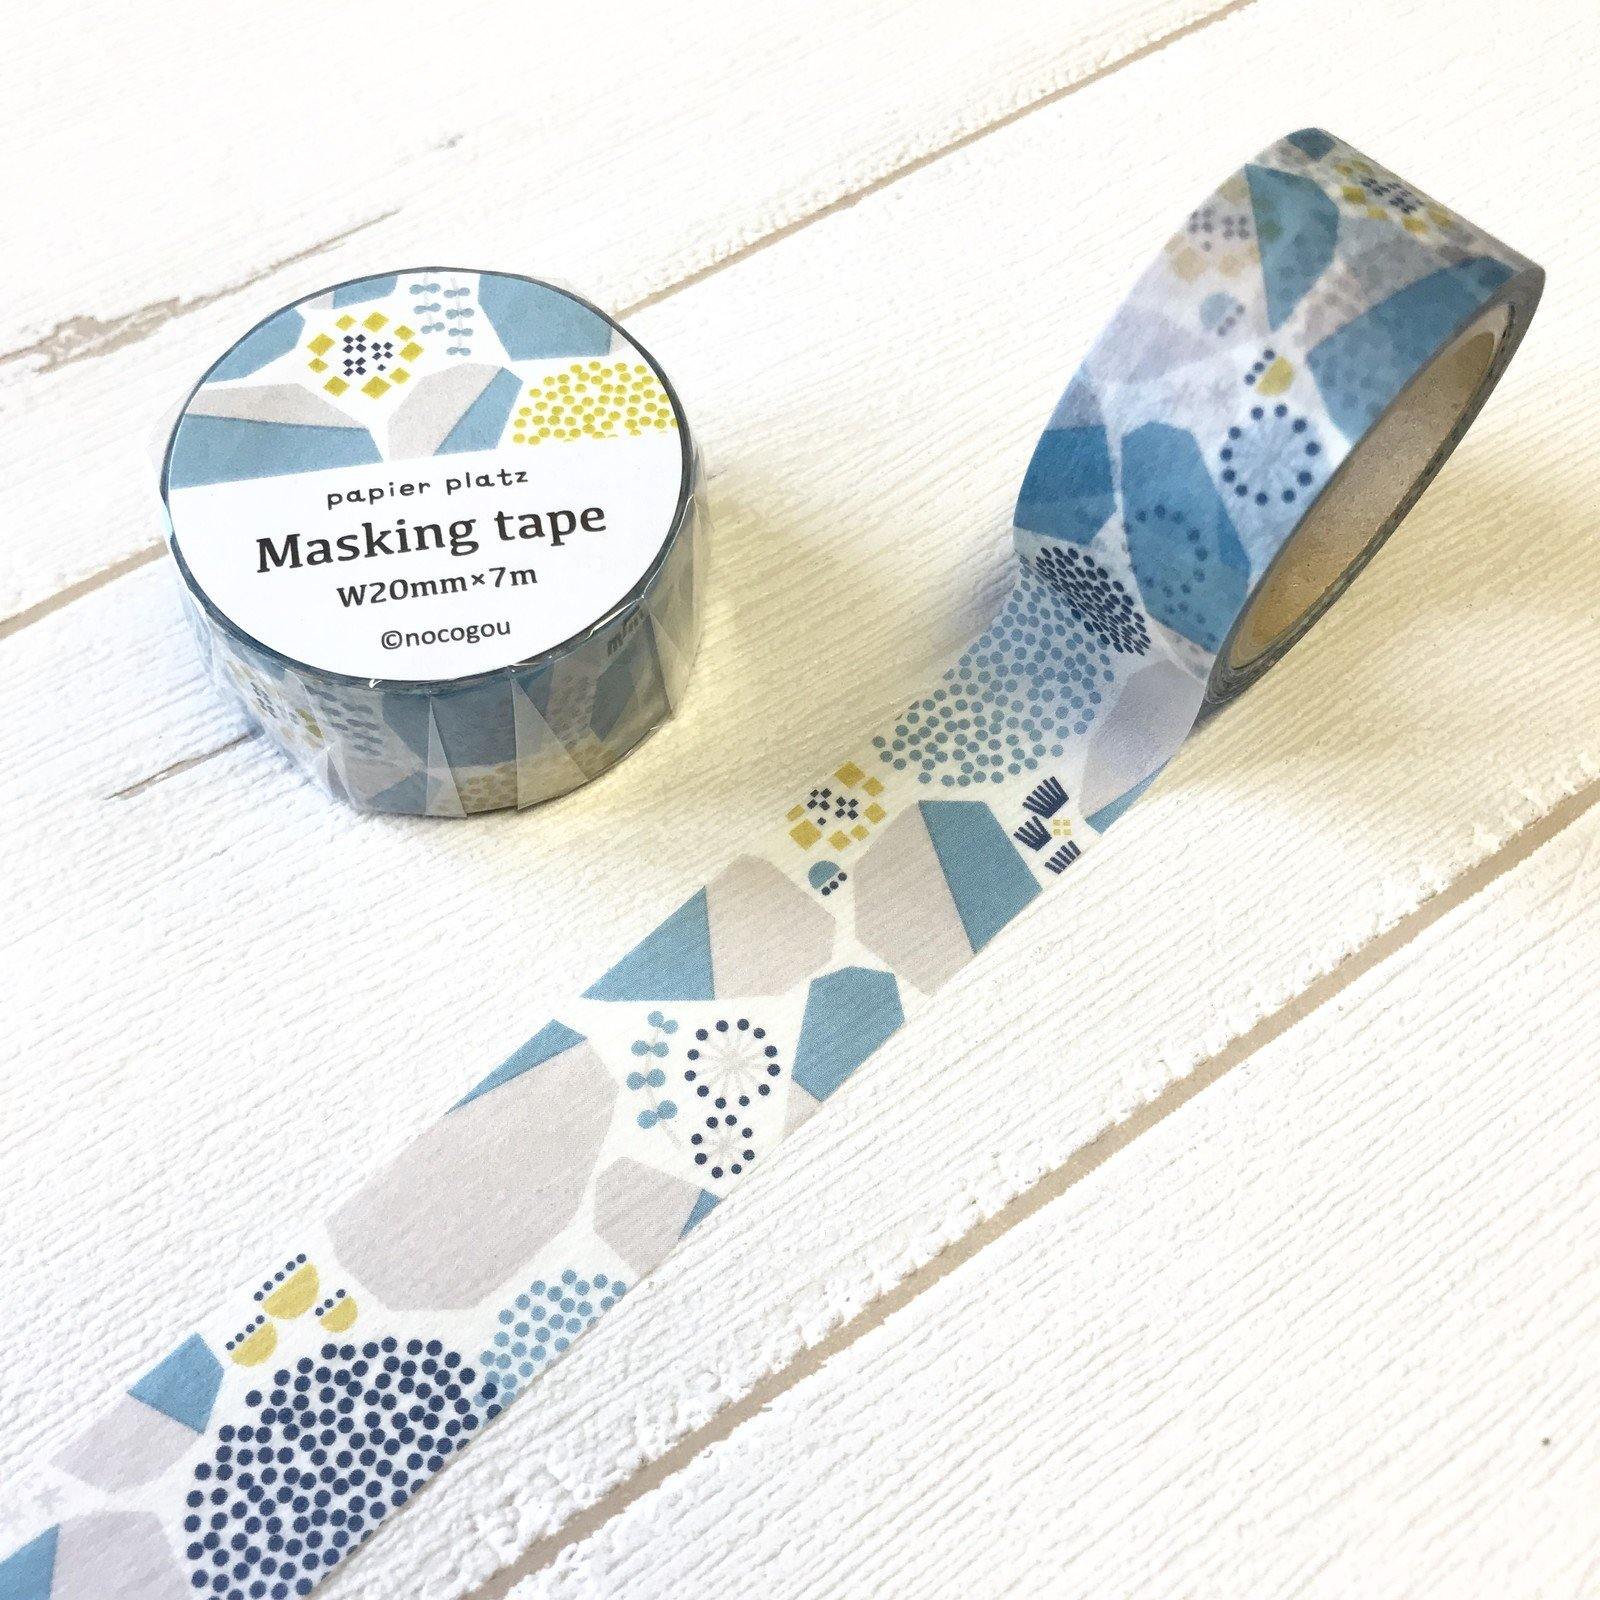 Papier Platz Masking Tape Washi Tape (20mm) - Blue & Grey Irregular Pattern | papermindstationery.com | 20mm Washi Tapes, boxing, Flower, Papier Platz, sale, Washi Tapes